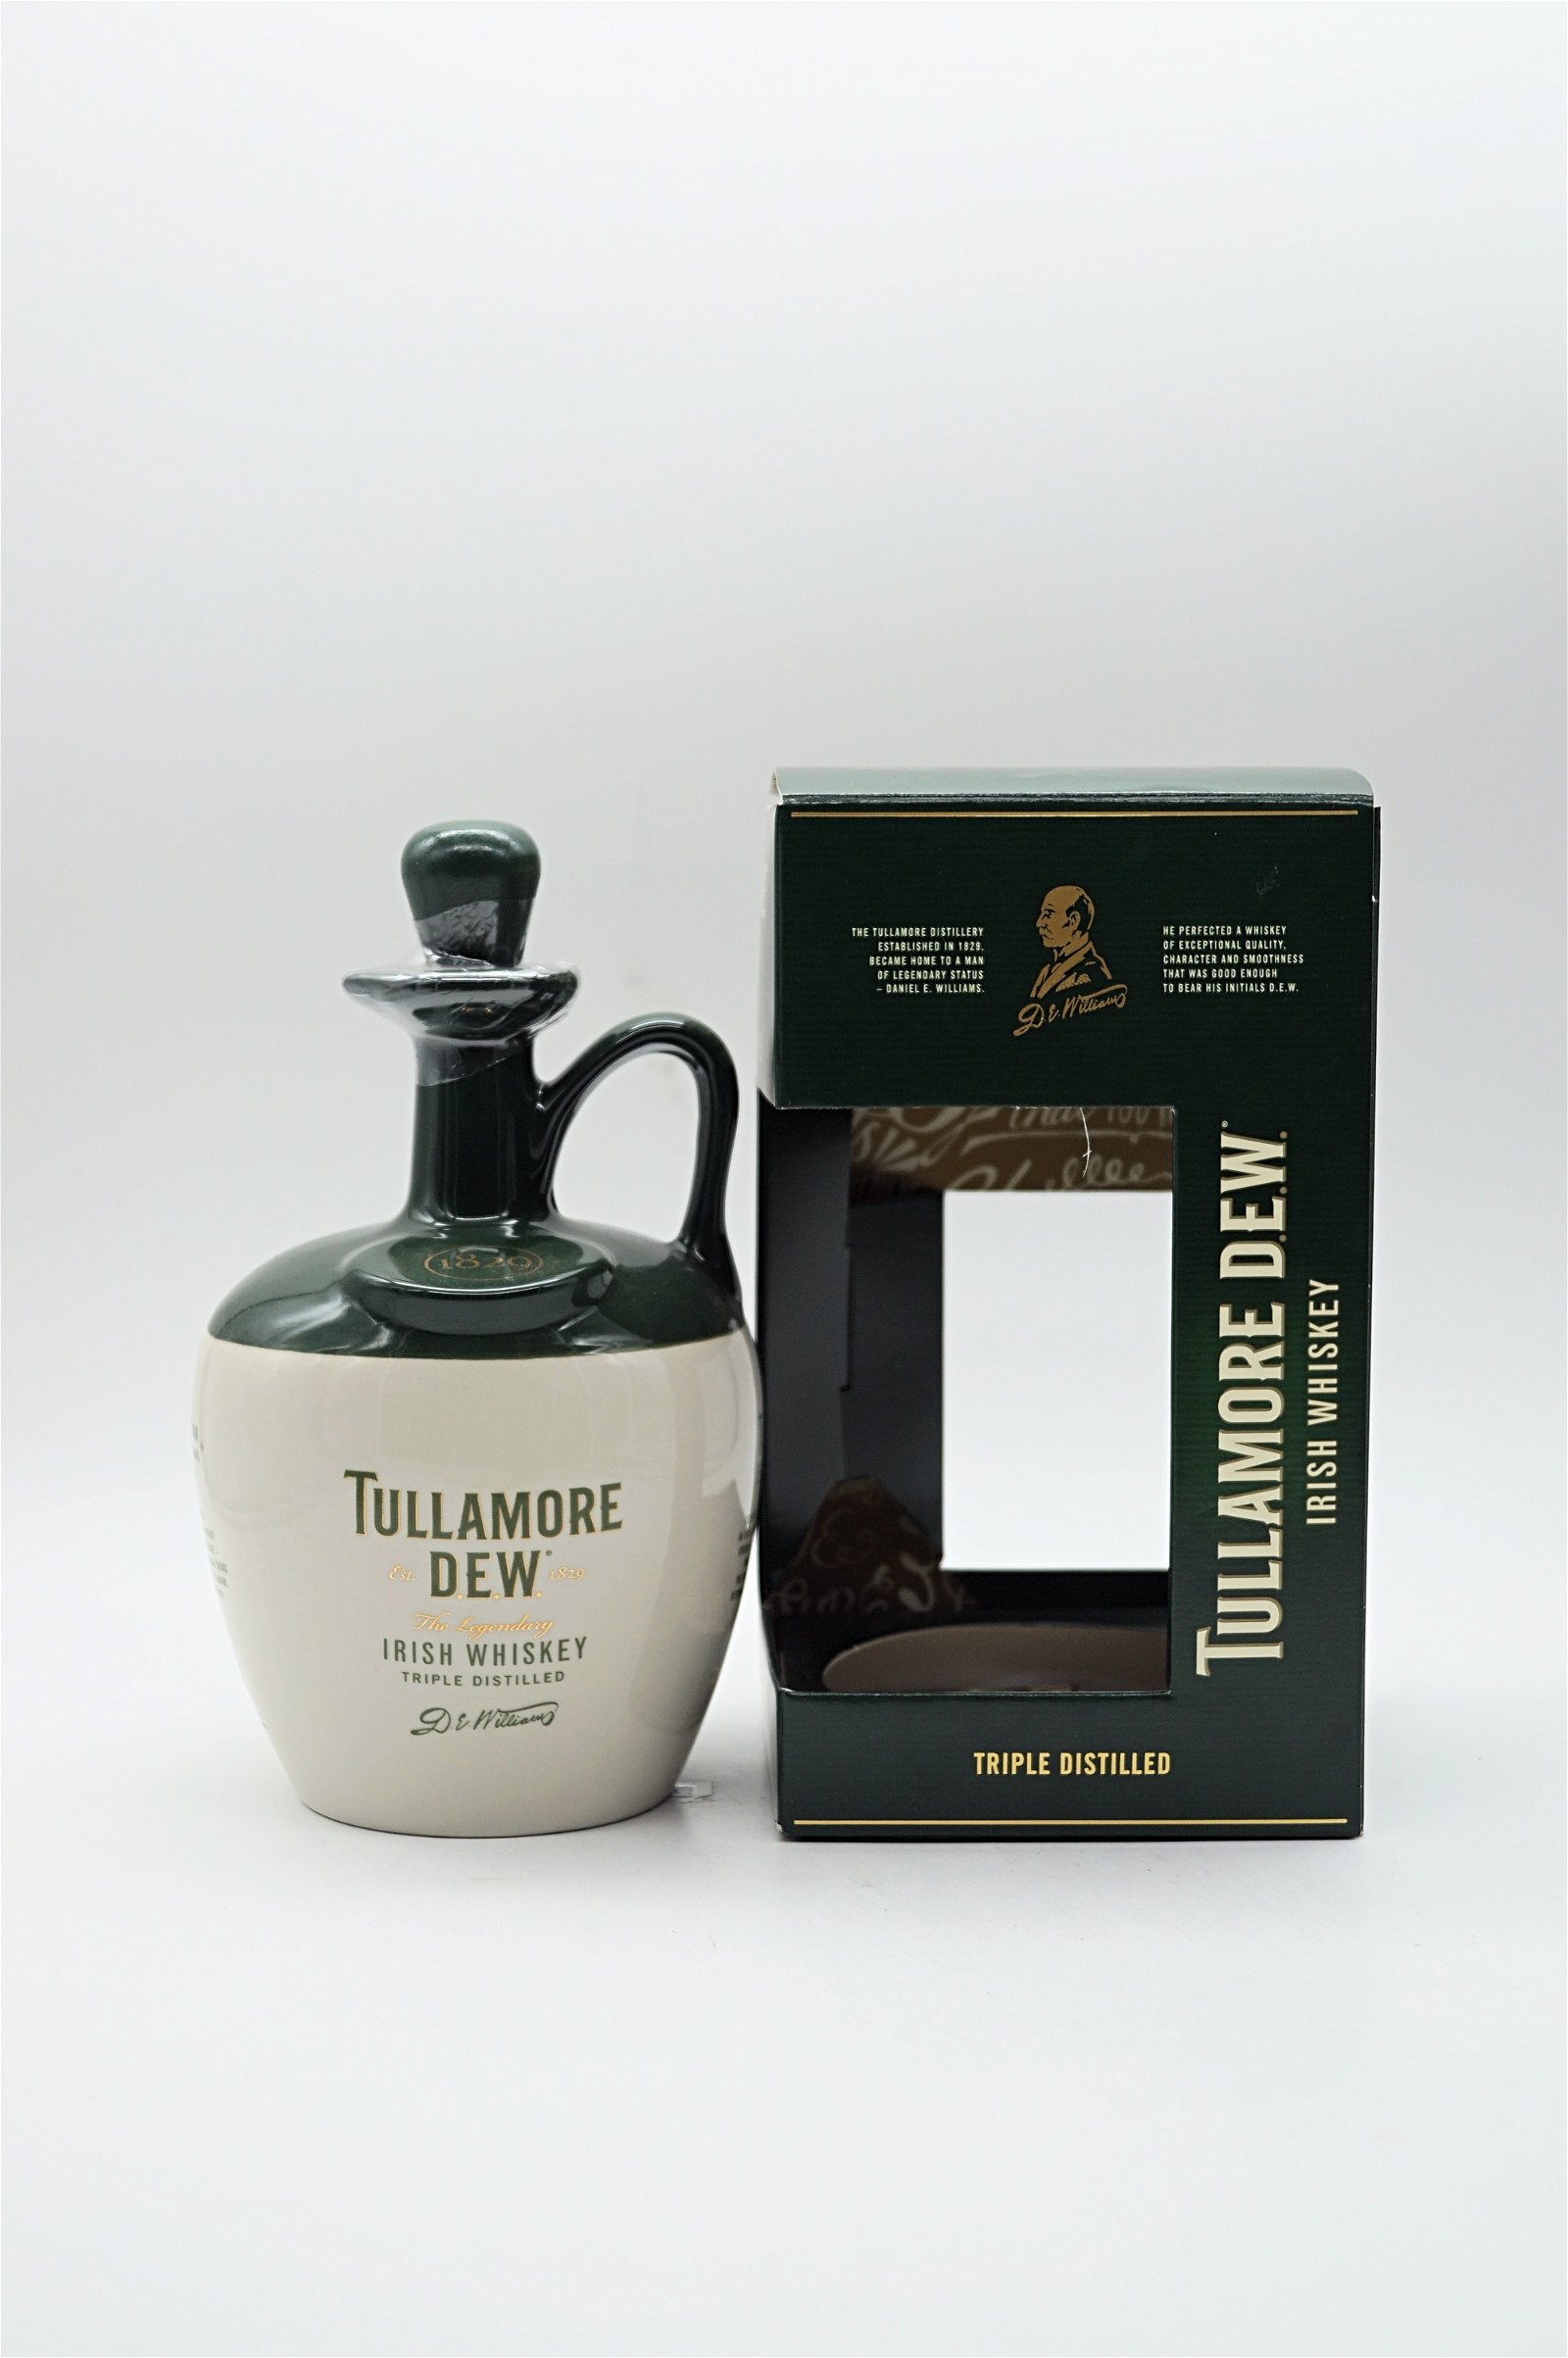 Tullamore Dew The Legendary Irish Whiskey im Krug